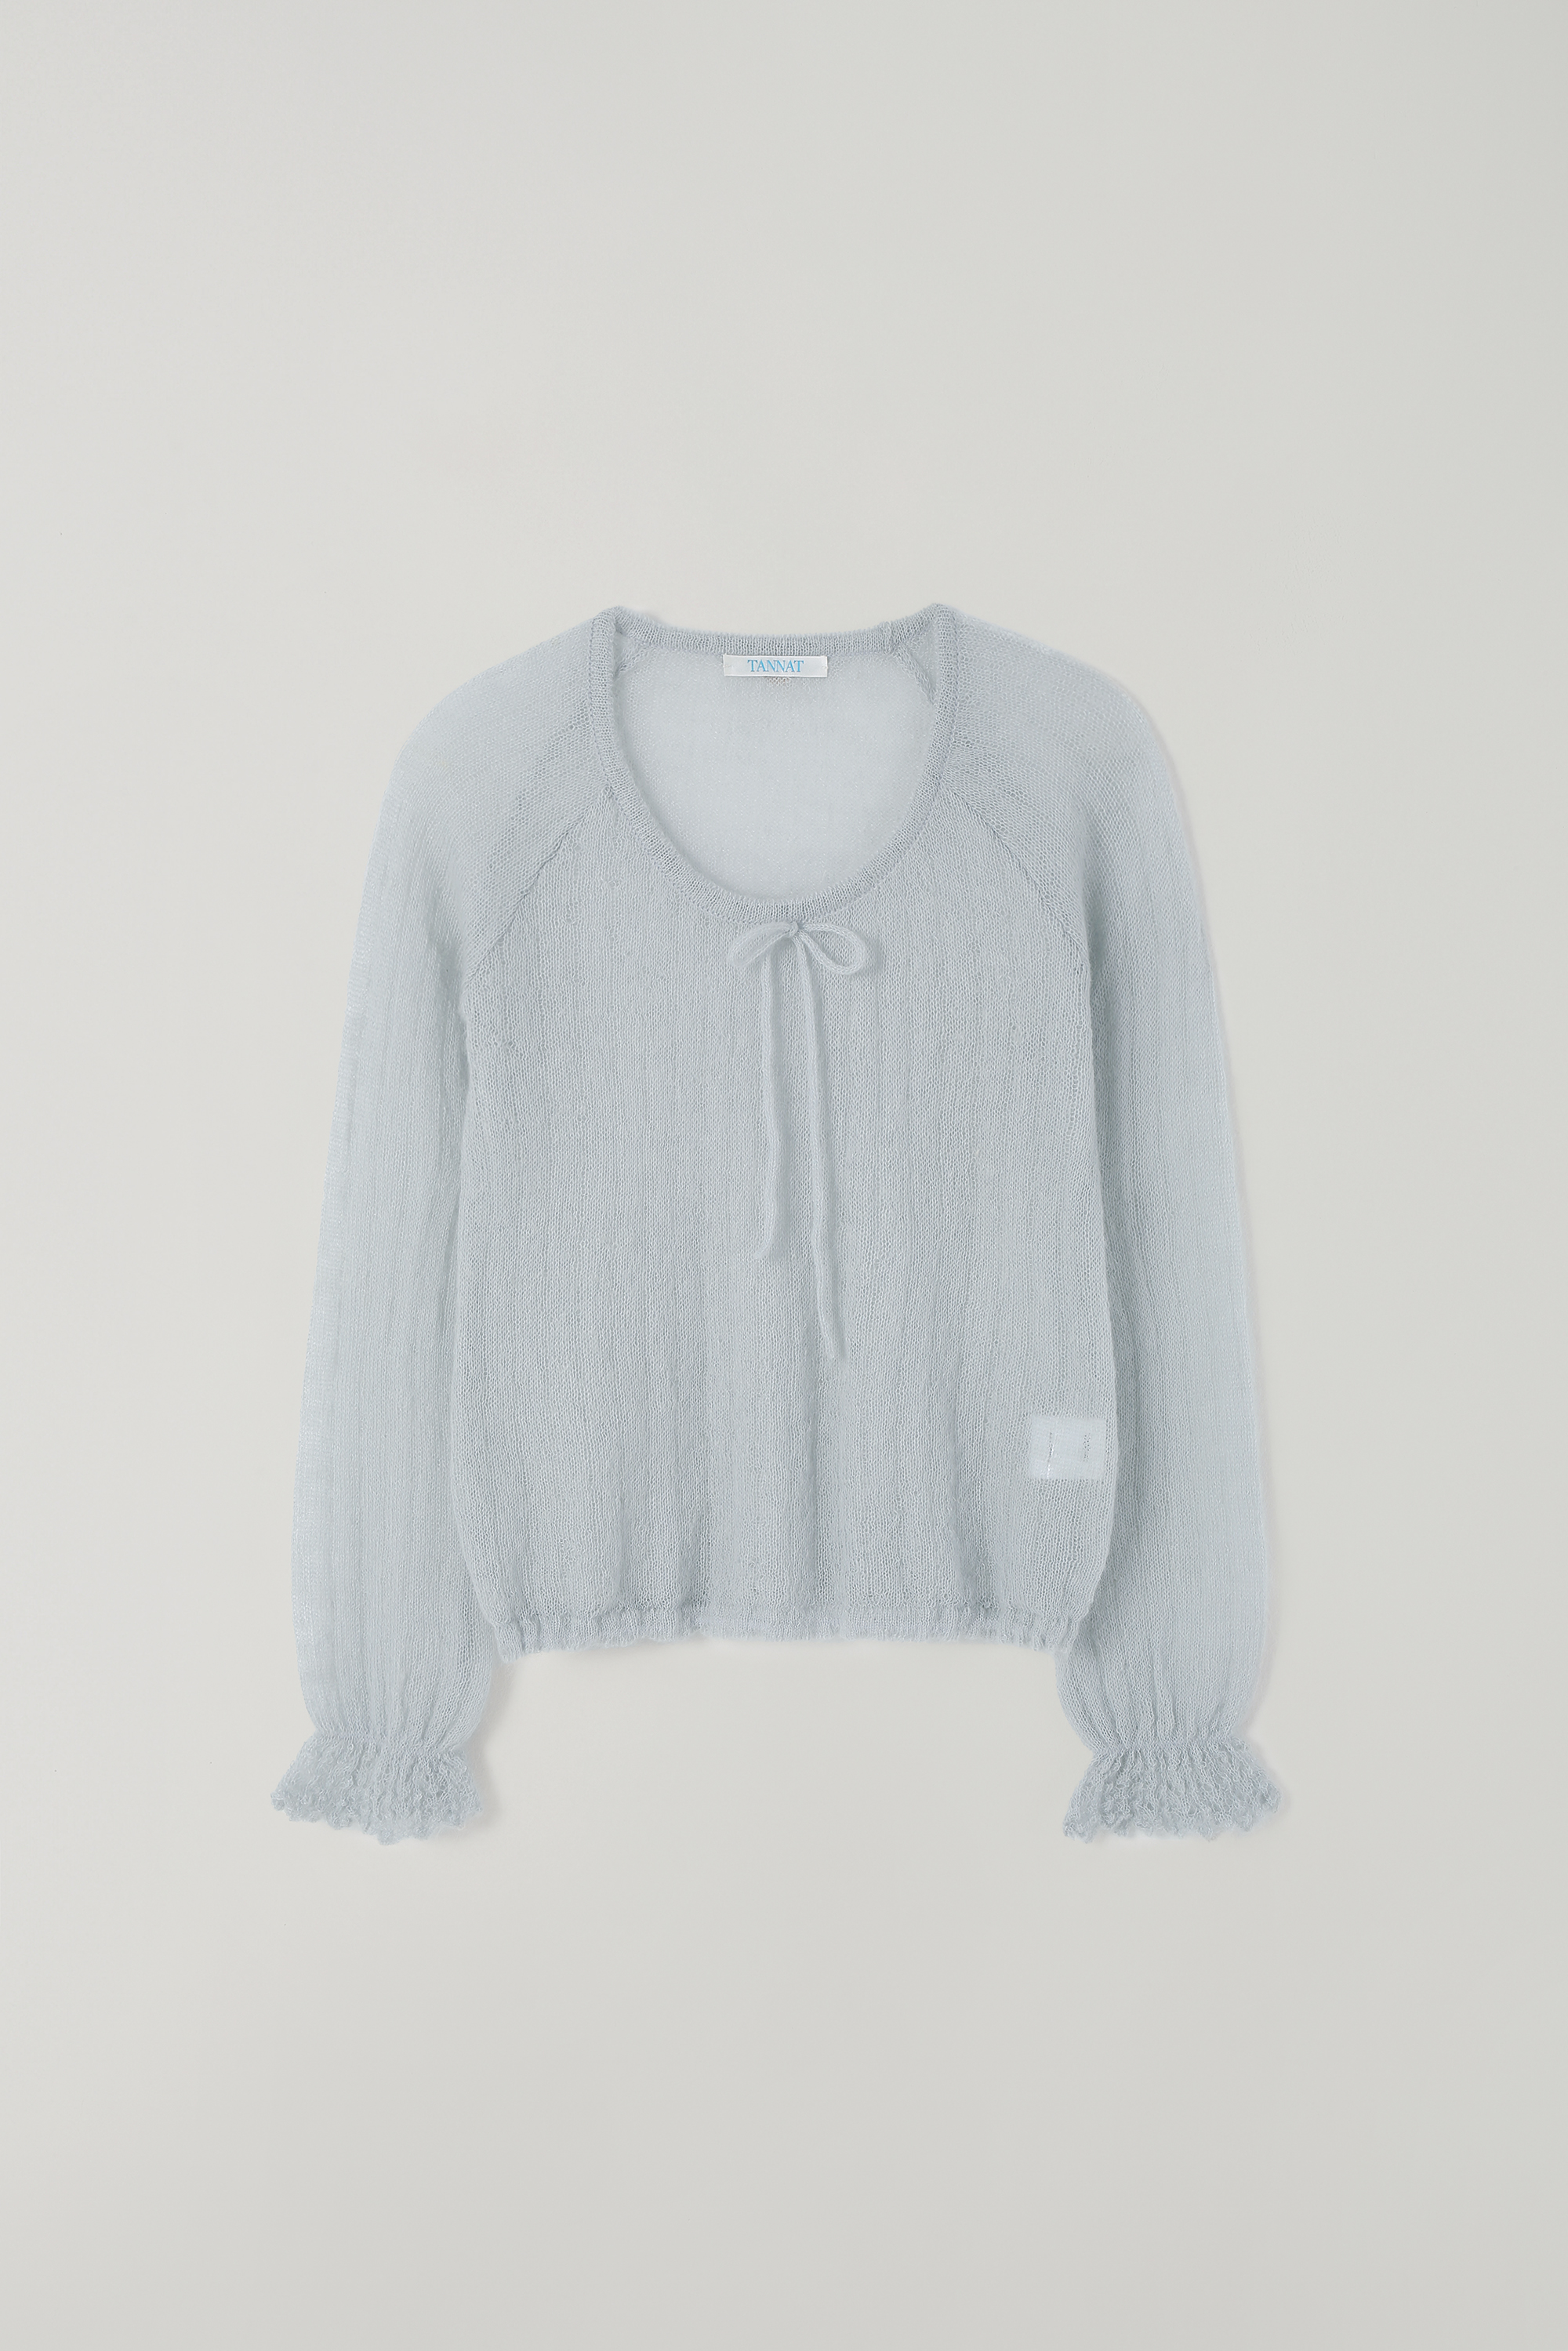 T/T Mohair lace knit (blue gray)